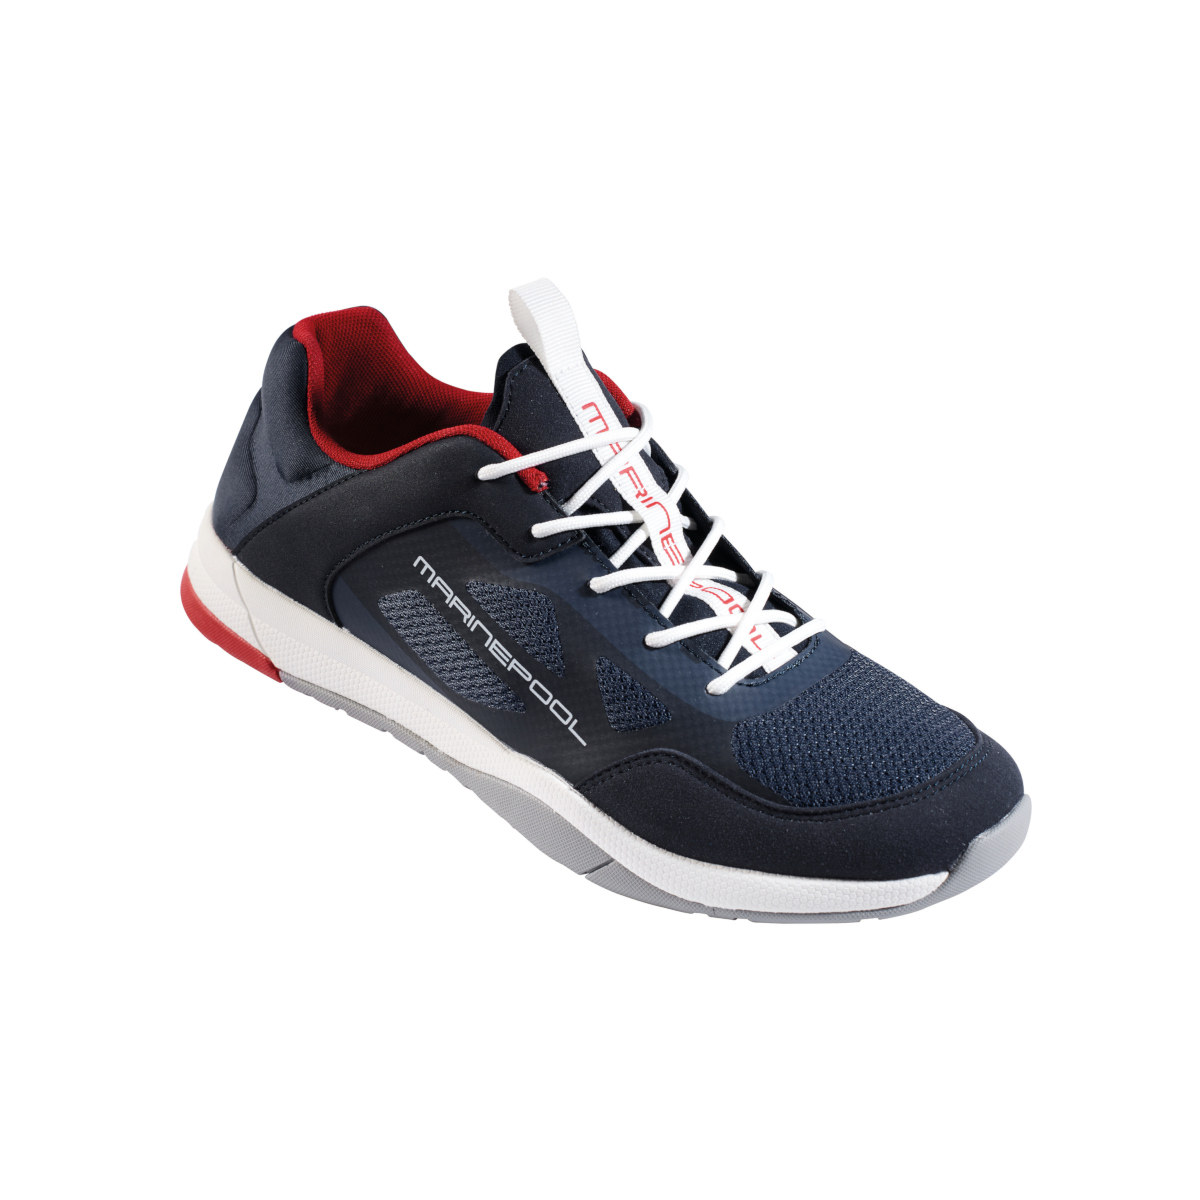 Marinepool Ocean Spirit chaussure de pont, homme - bleu marine/rouge, pointure 42